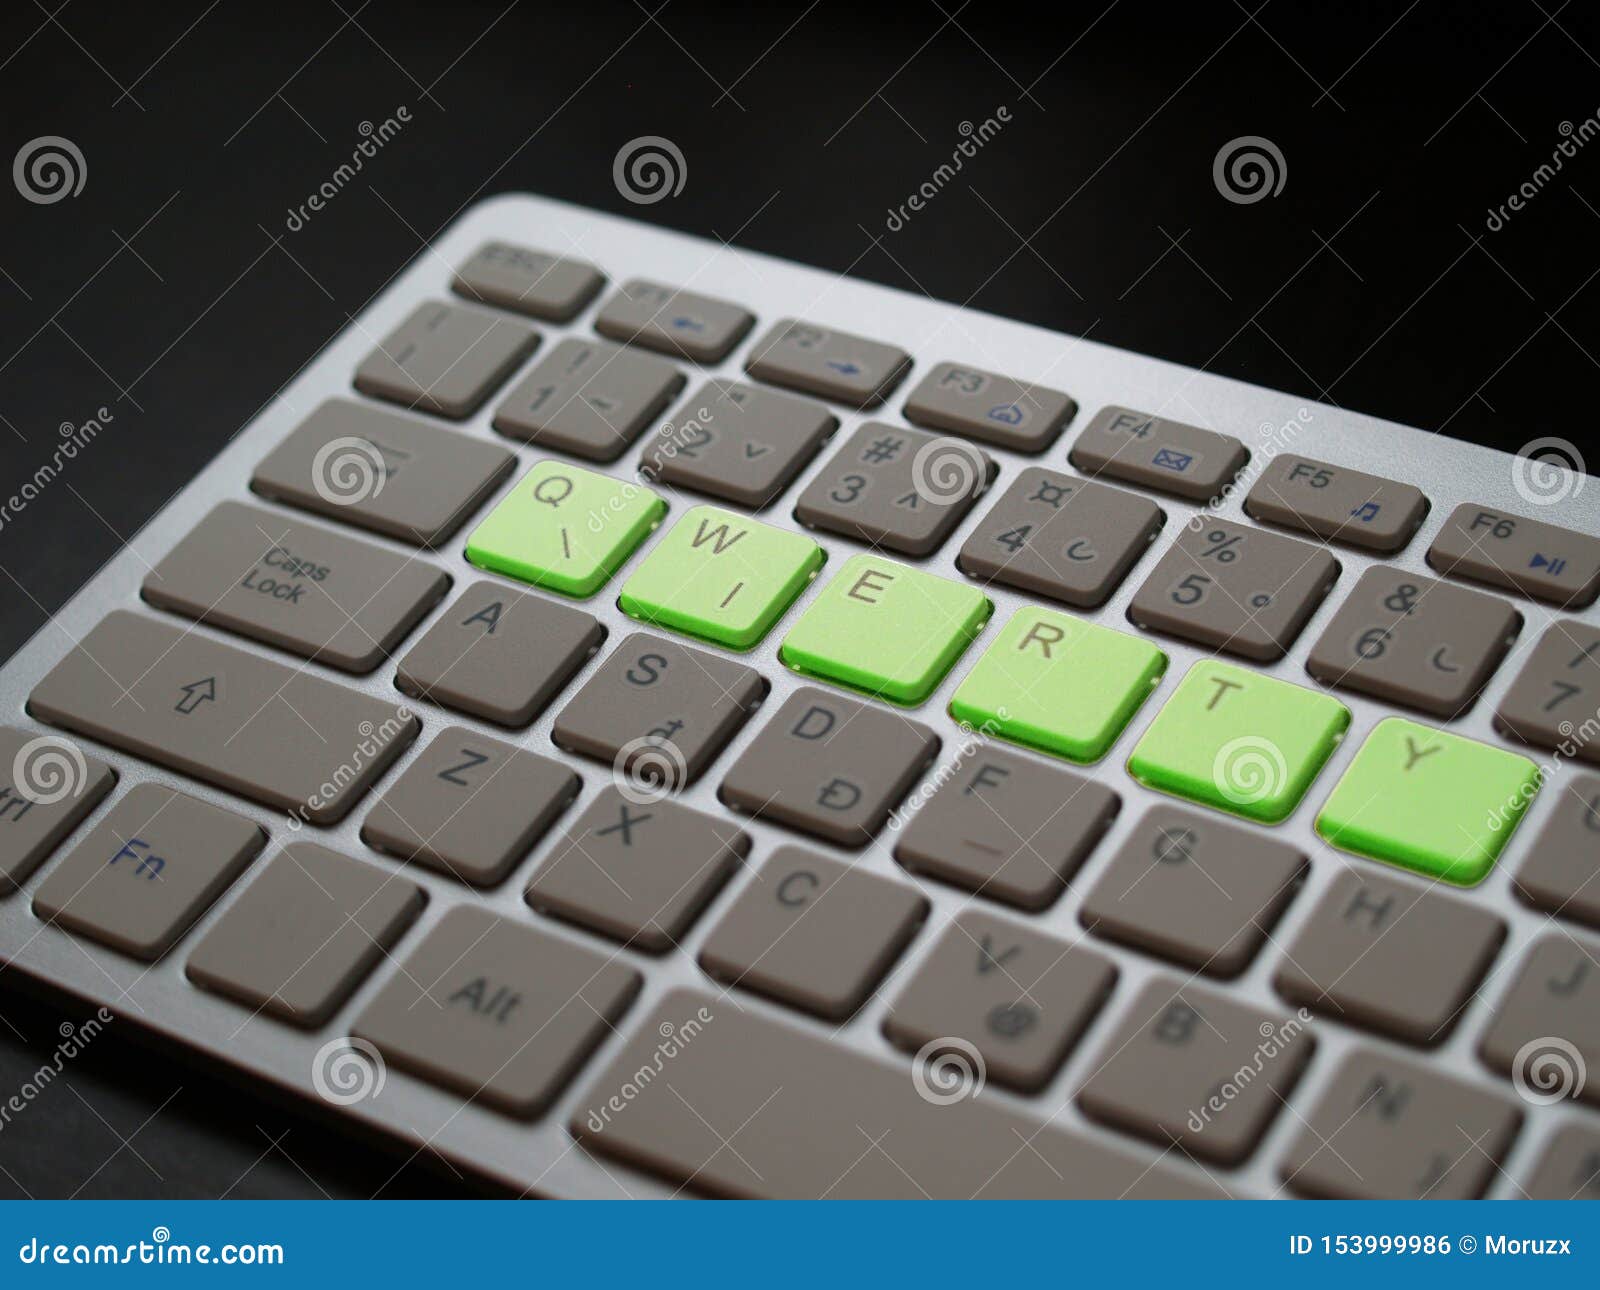 Maleri matchmaker videnskabelig QWERTY Computer Keyboard Layout with Highlighted Keys Stock Photo - Image  of inking, communication: 153999986